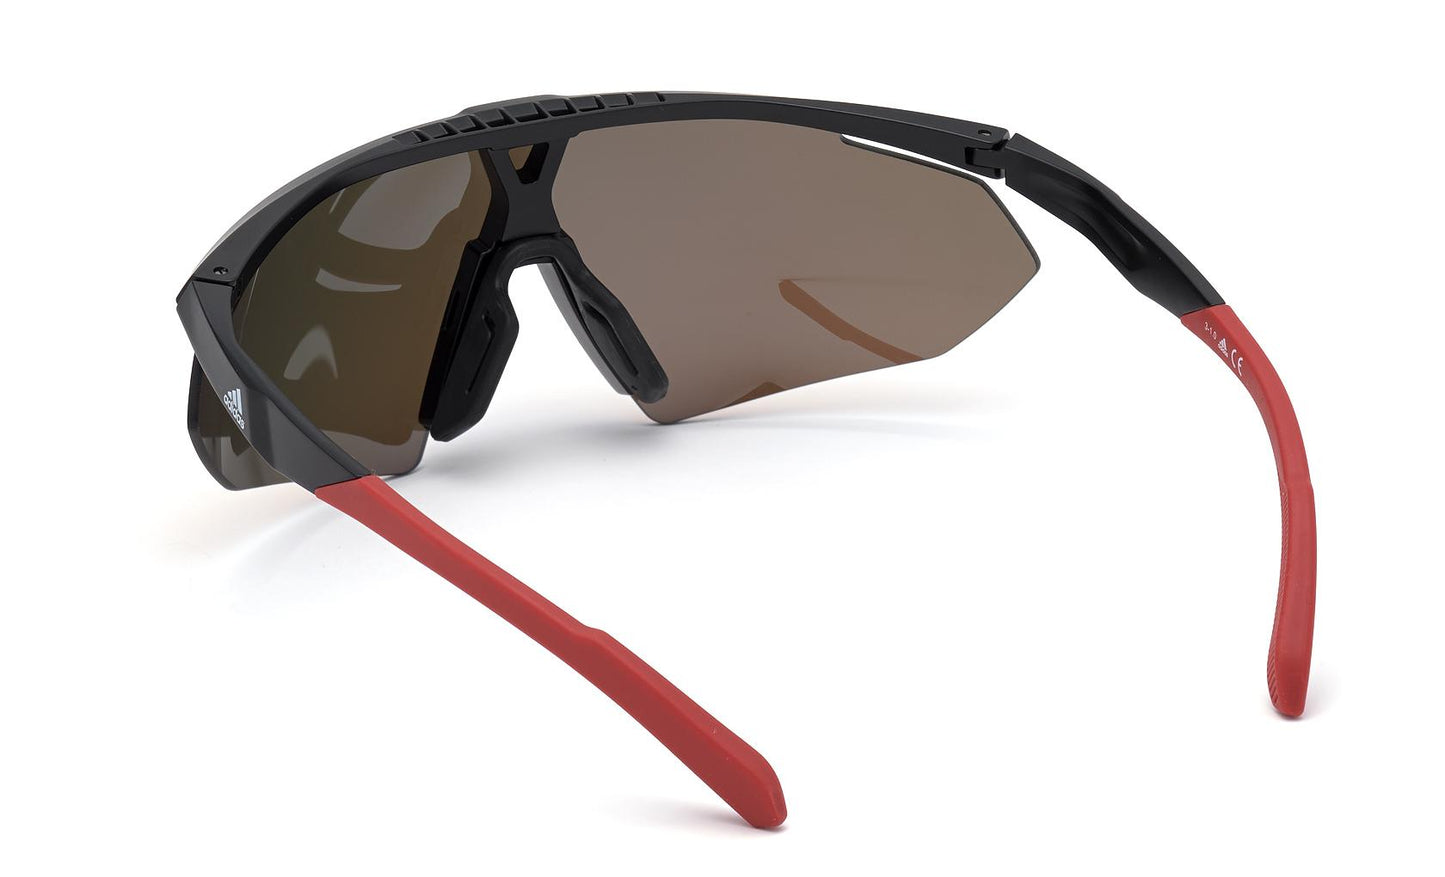 Adidas Sport Sunglasses 01L SHINY BLACK